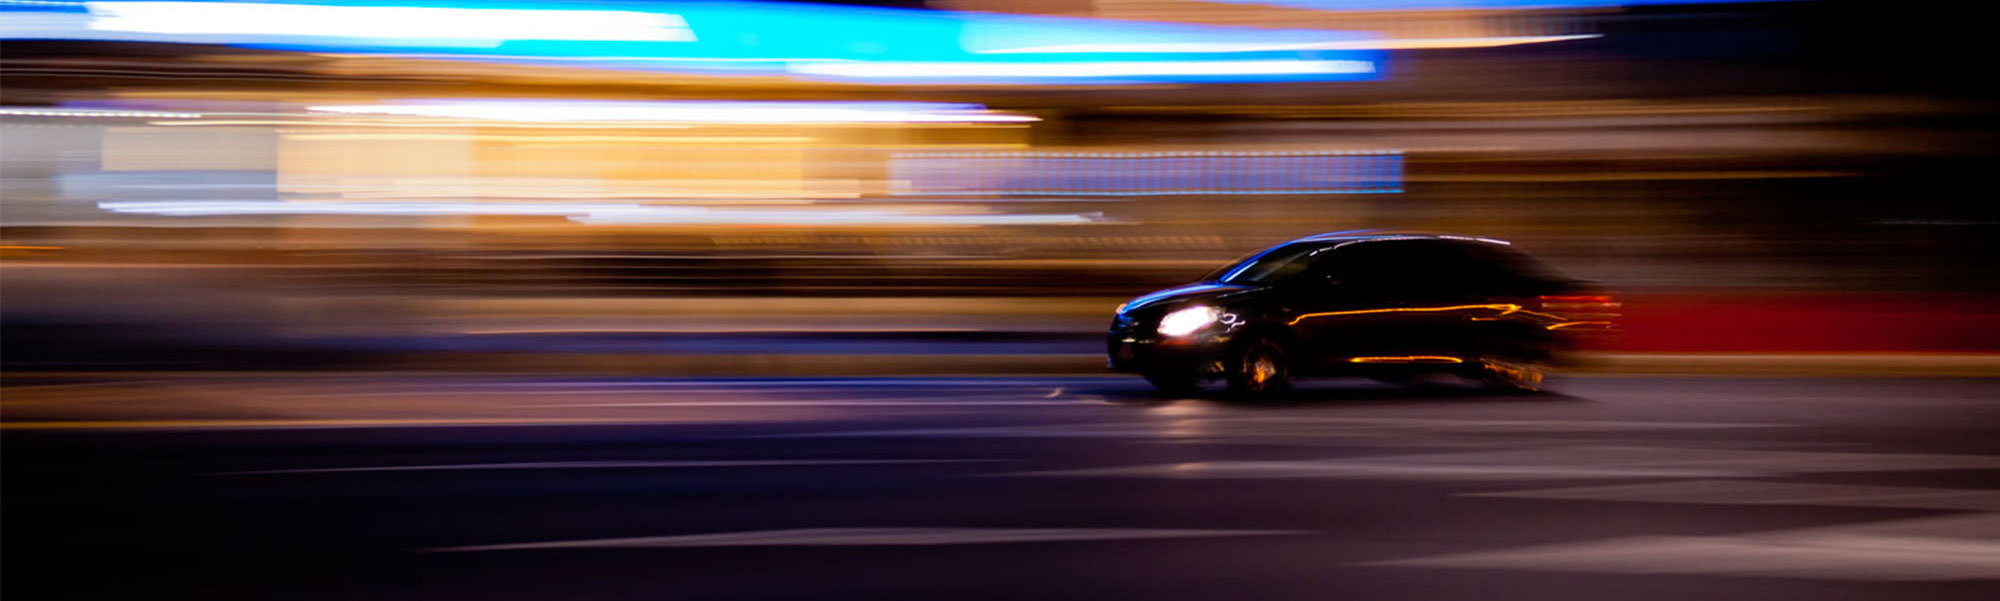 The physics of speeding cars - Curious